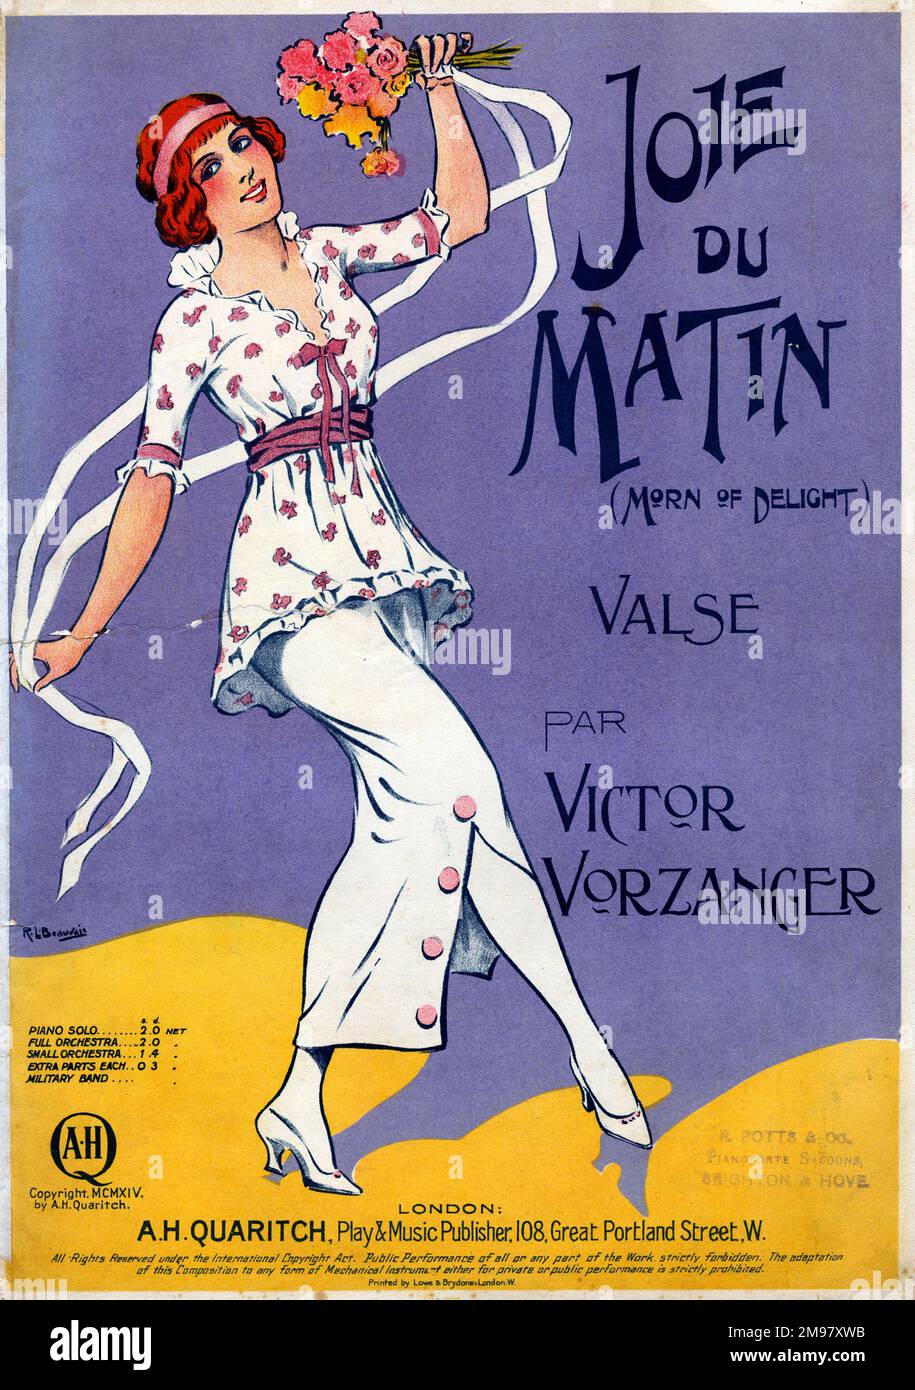 Copertina musicale, Joie du Matin (Morn of Delight) Valse di Victor Vorzanger. Foto Stock